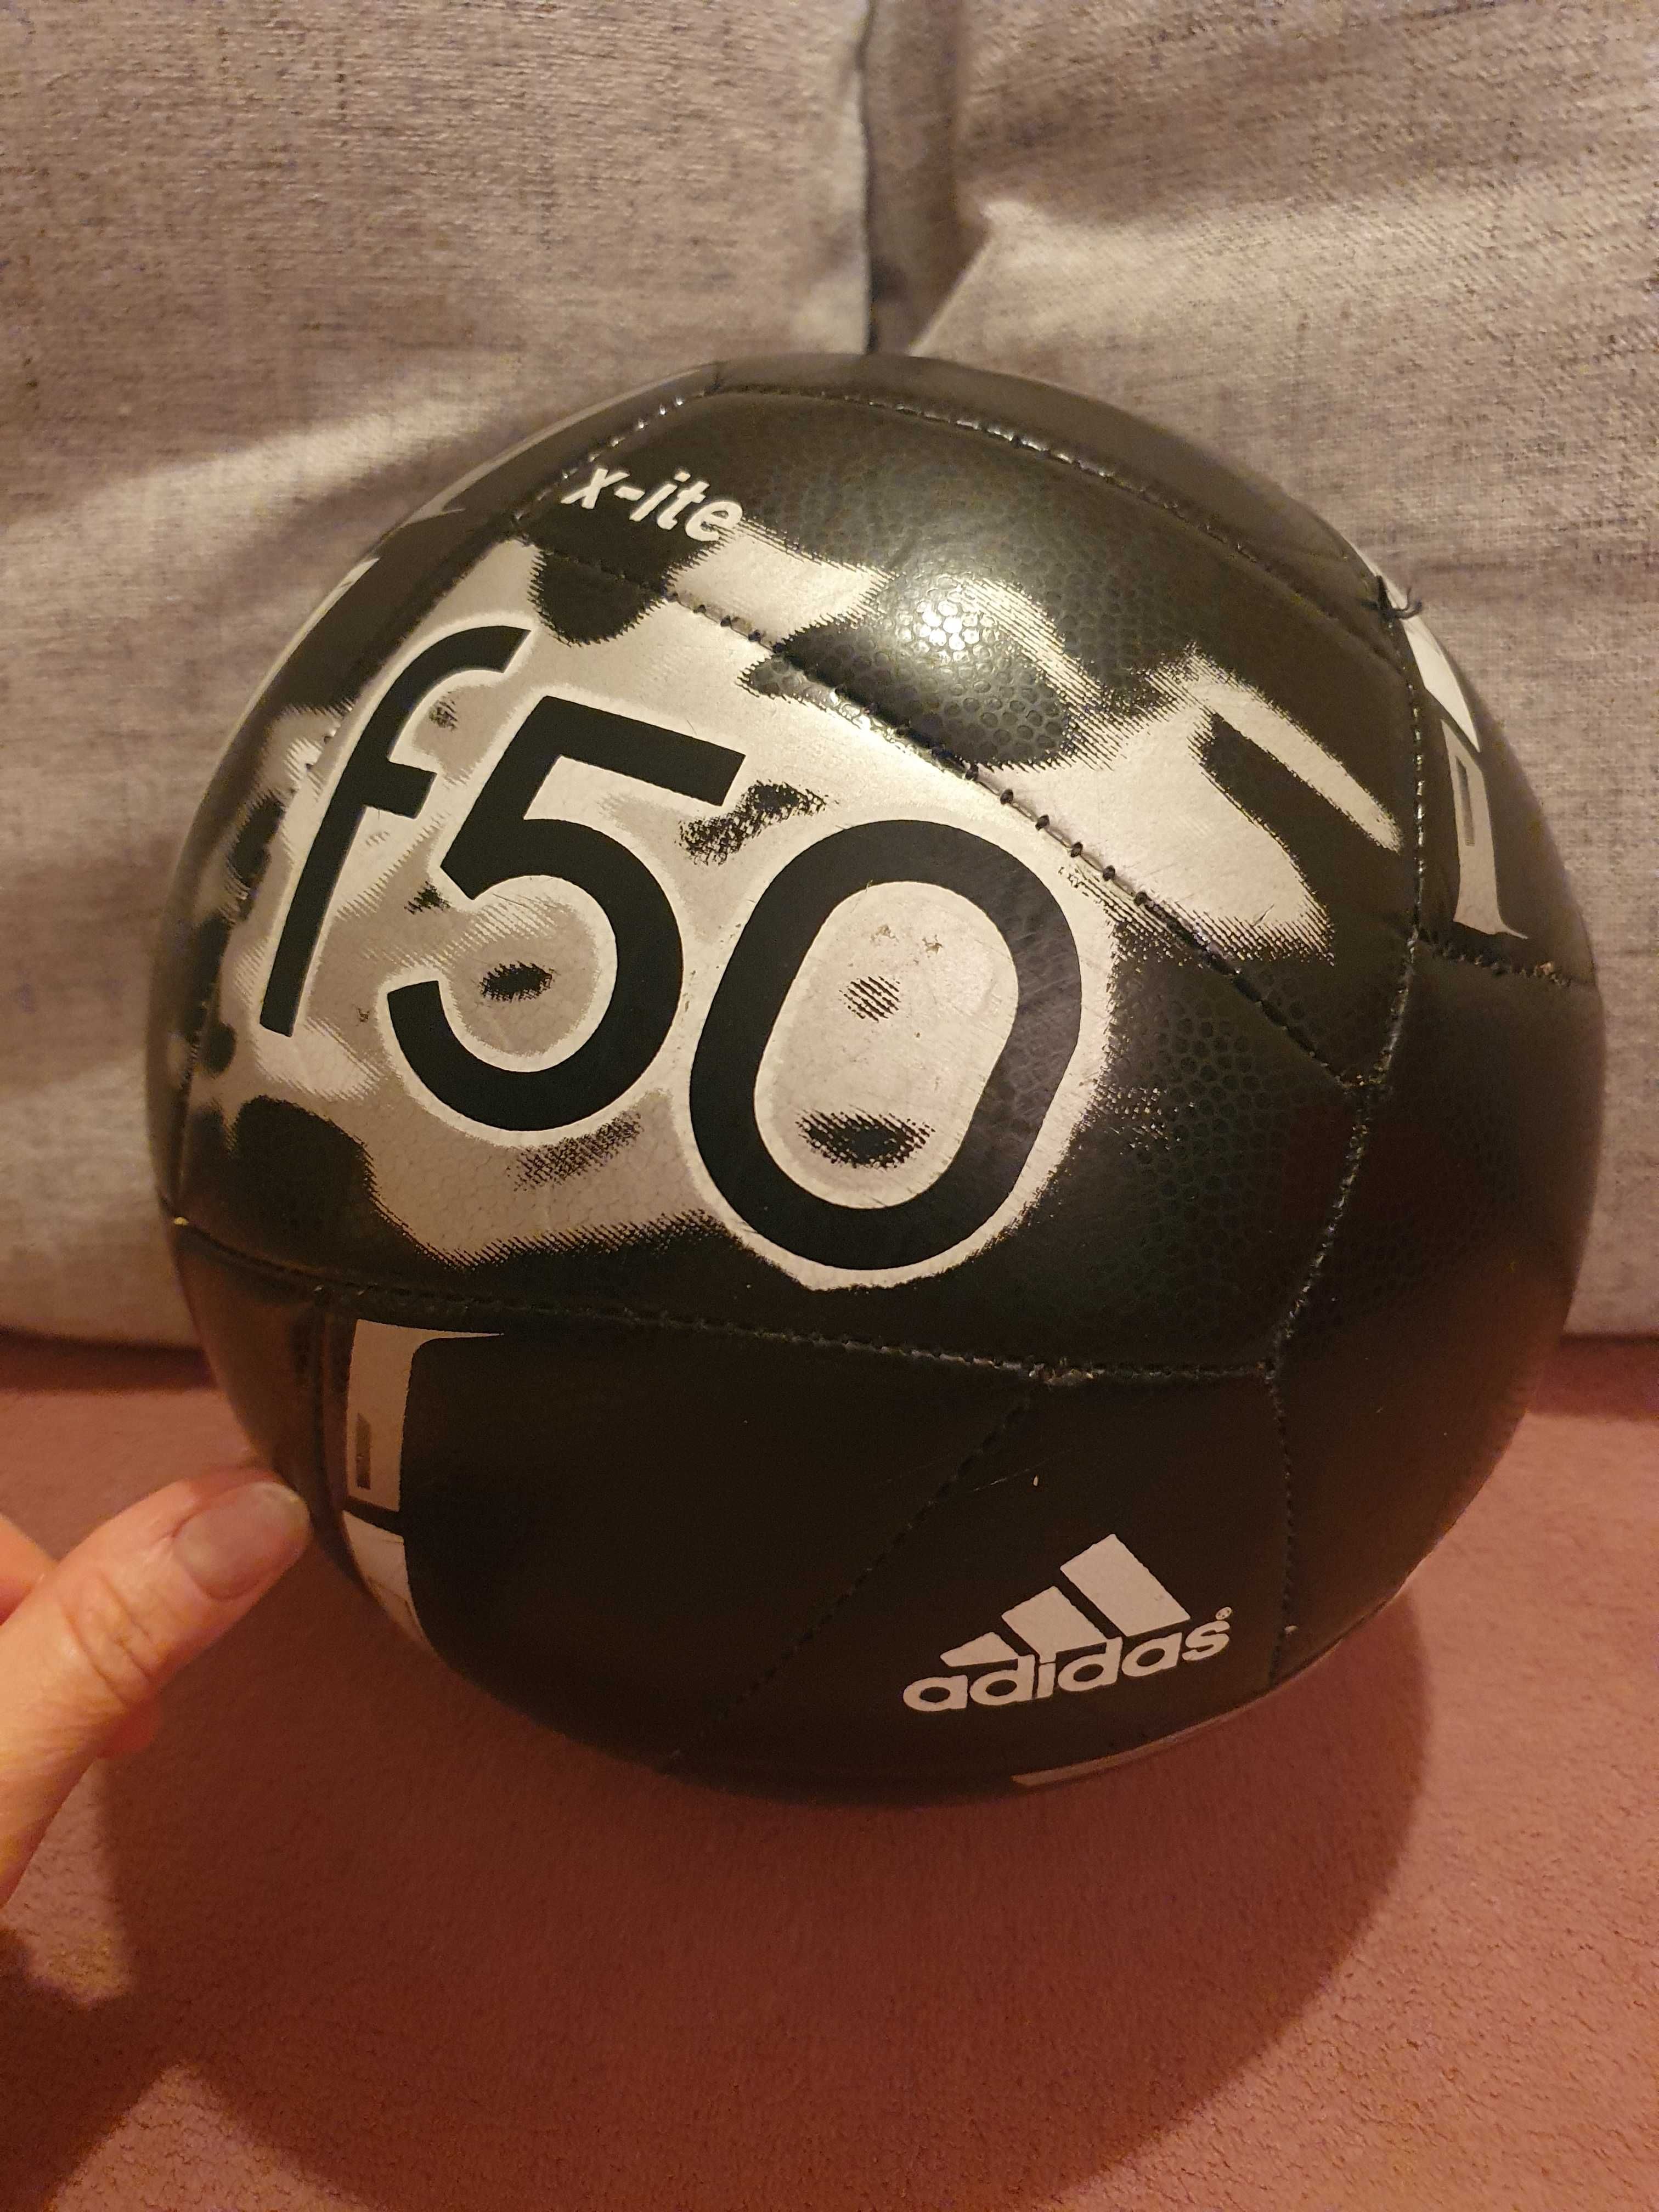 Piłka F50 X-Ite marki Adidas, r.540